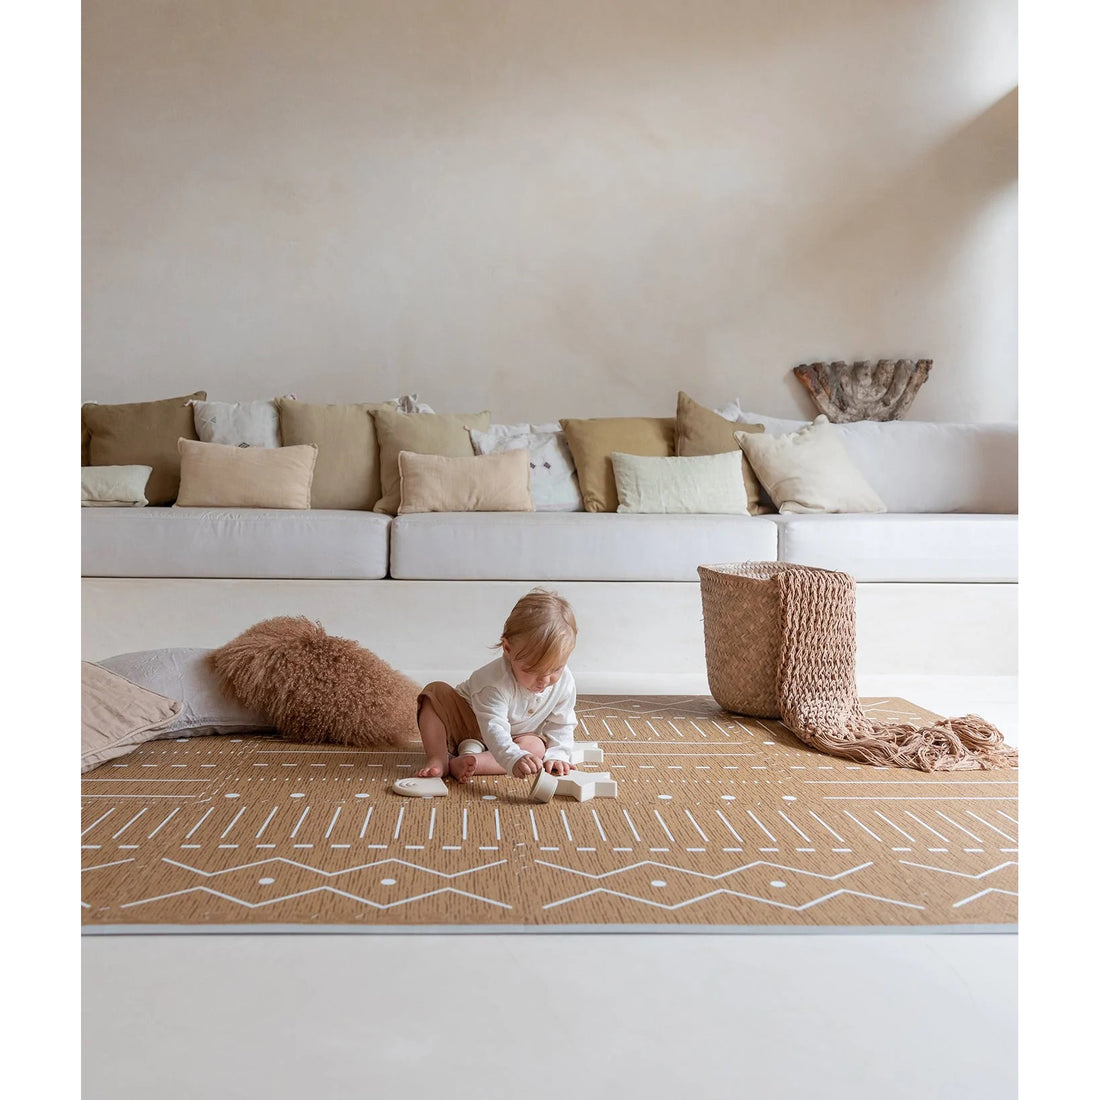 toddlekind-prettier-playmat-berber-camel-120x180cm-6-tiles-&-12-edging-borders-todk-338693- (13)